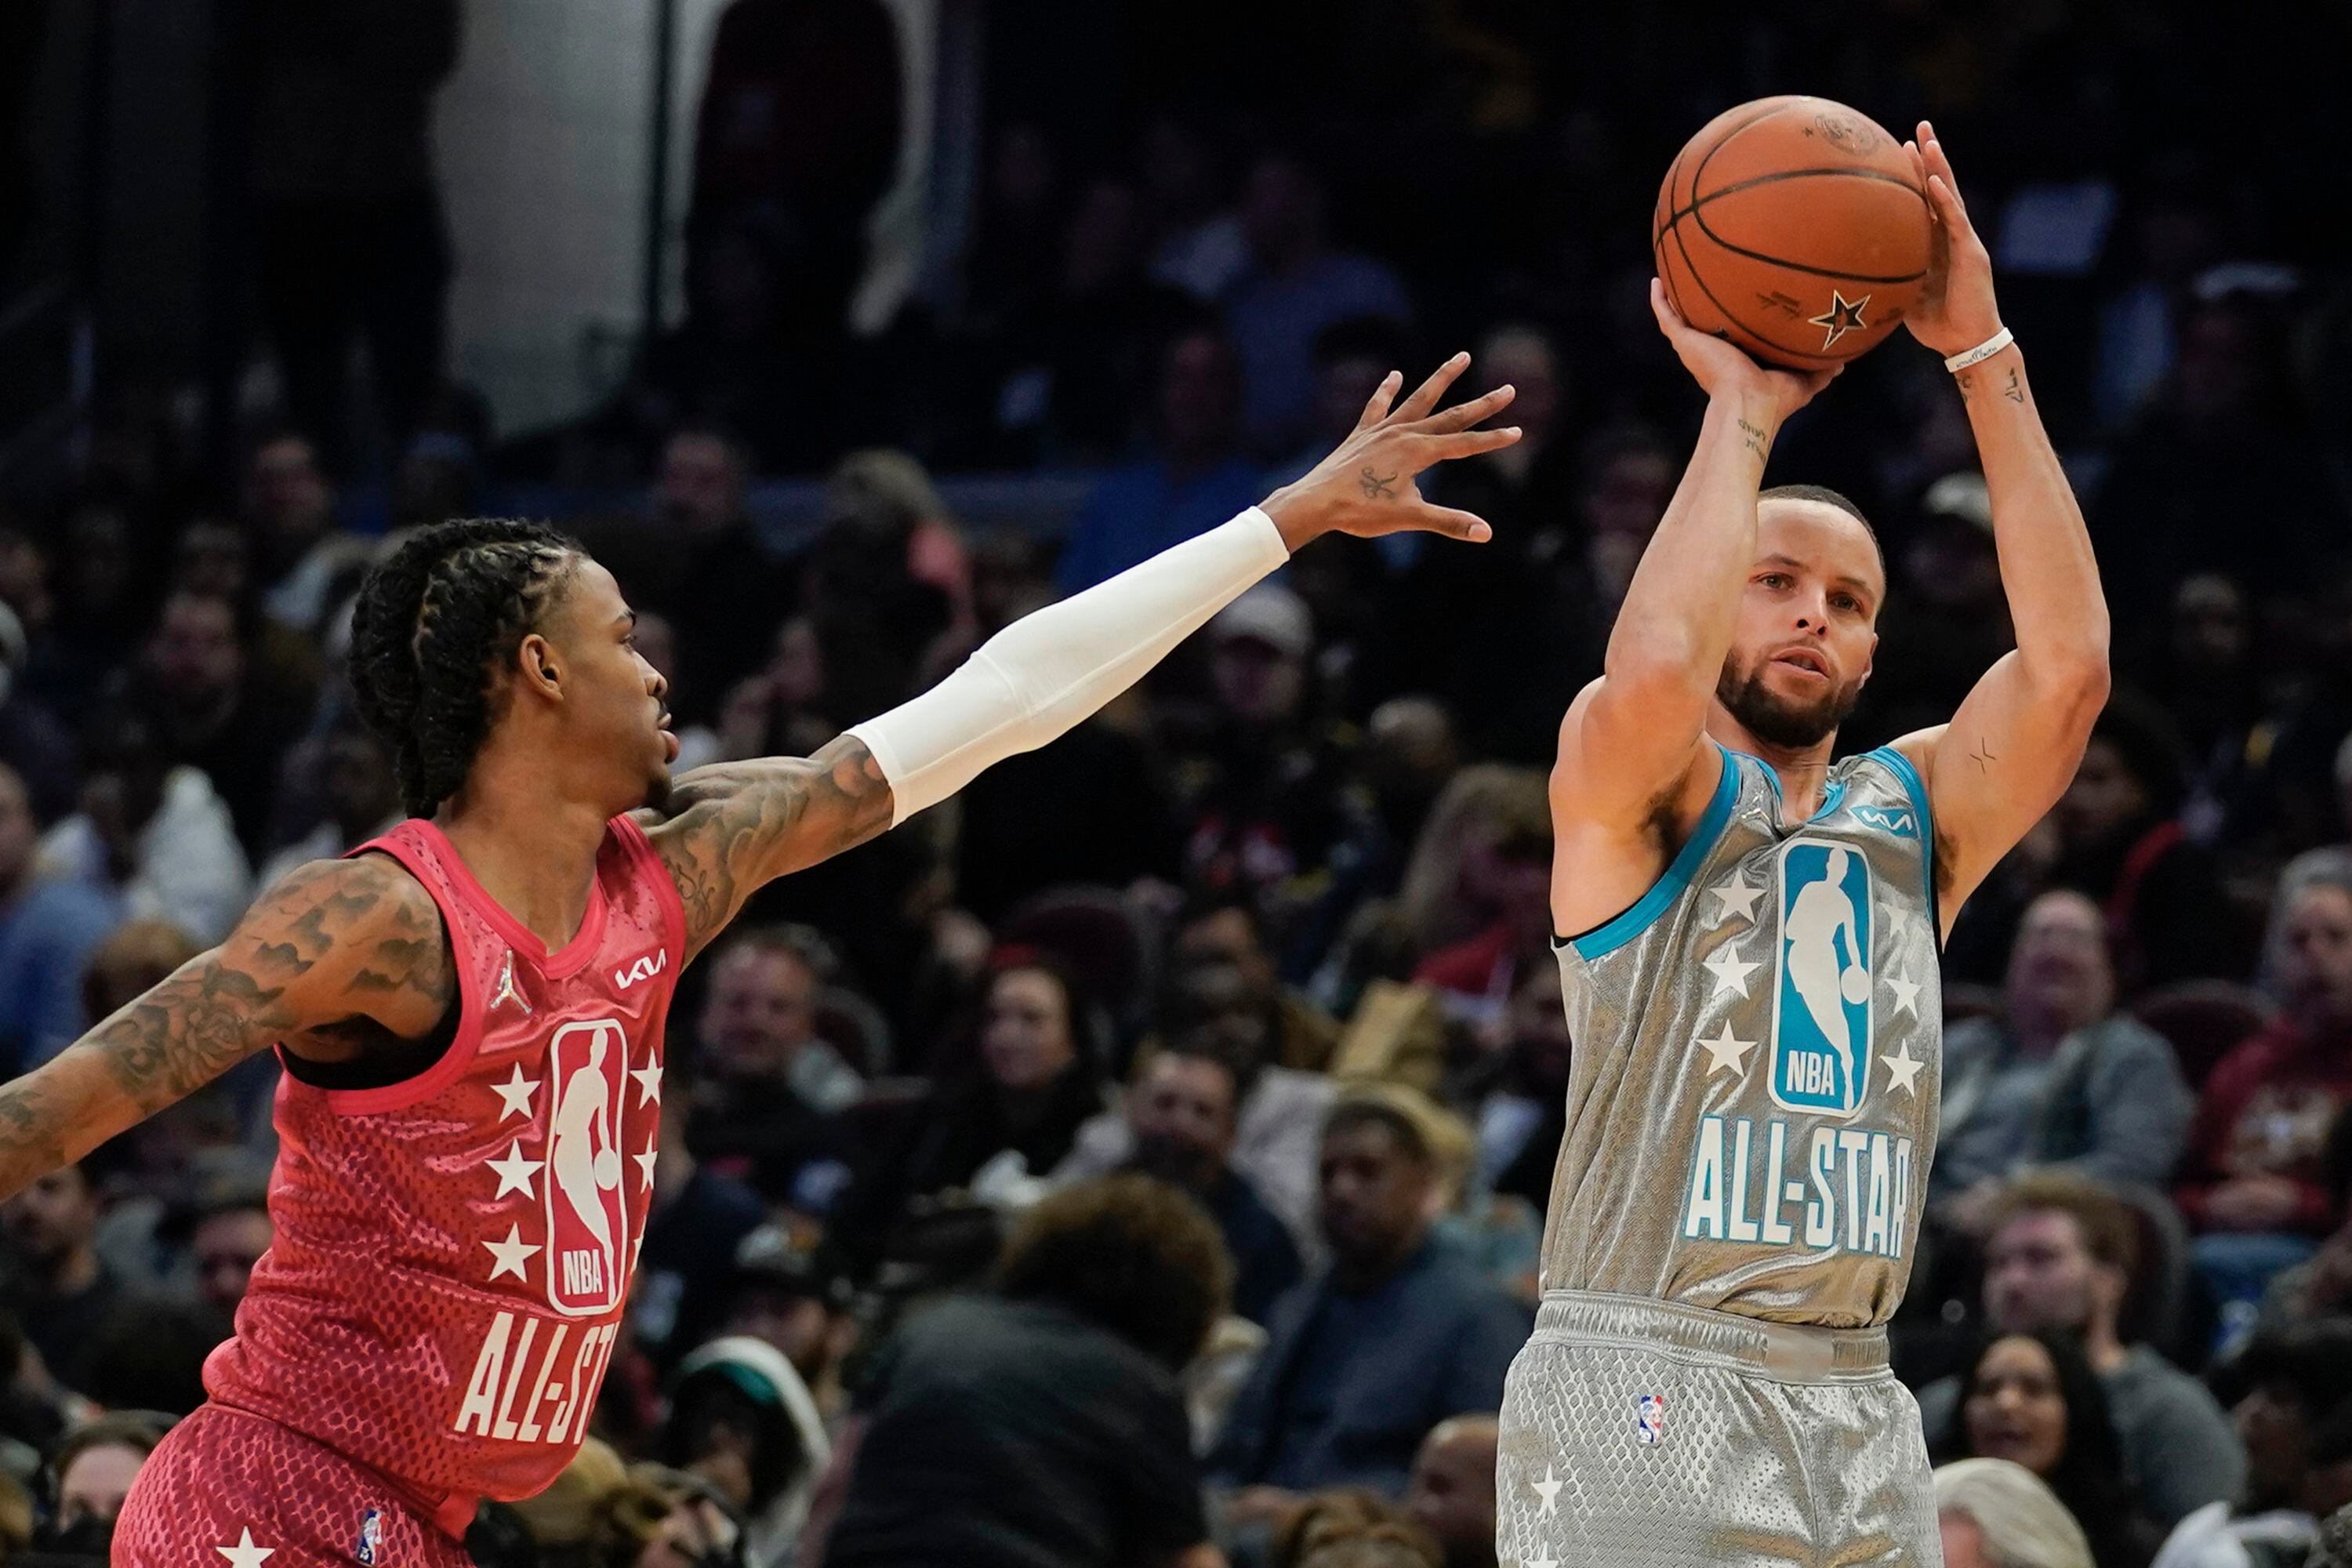 NBA All-Star Game 2016: Kobe Bryant takes centre stage